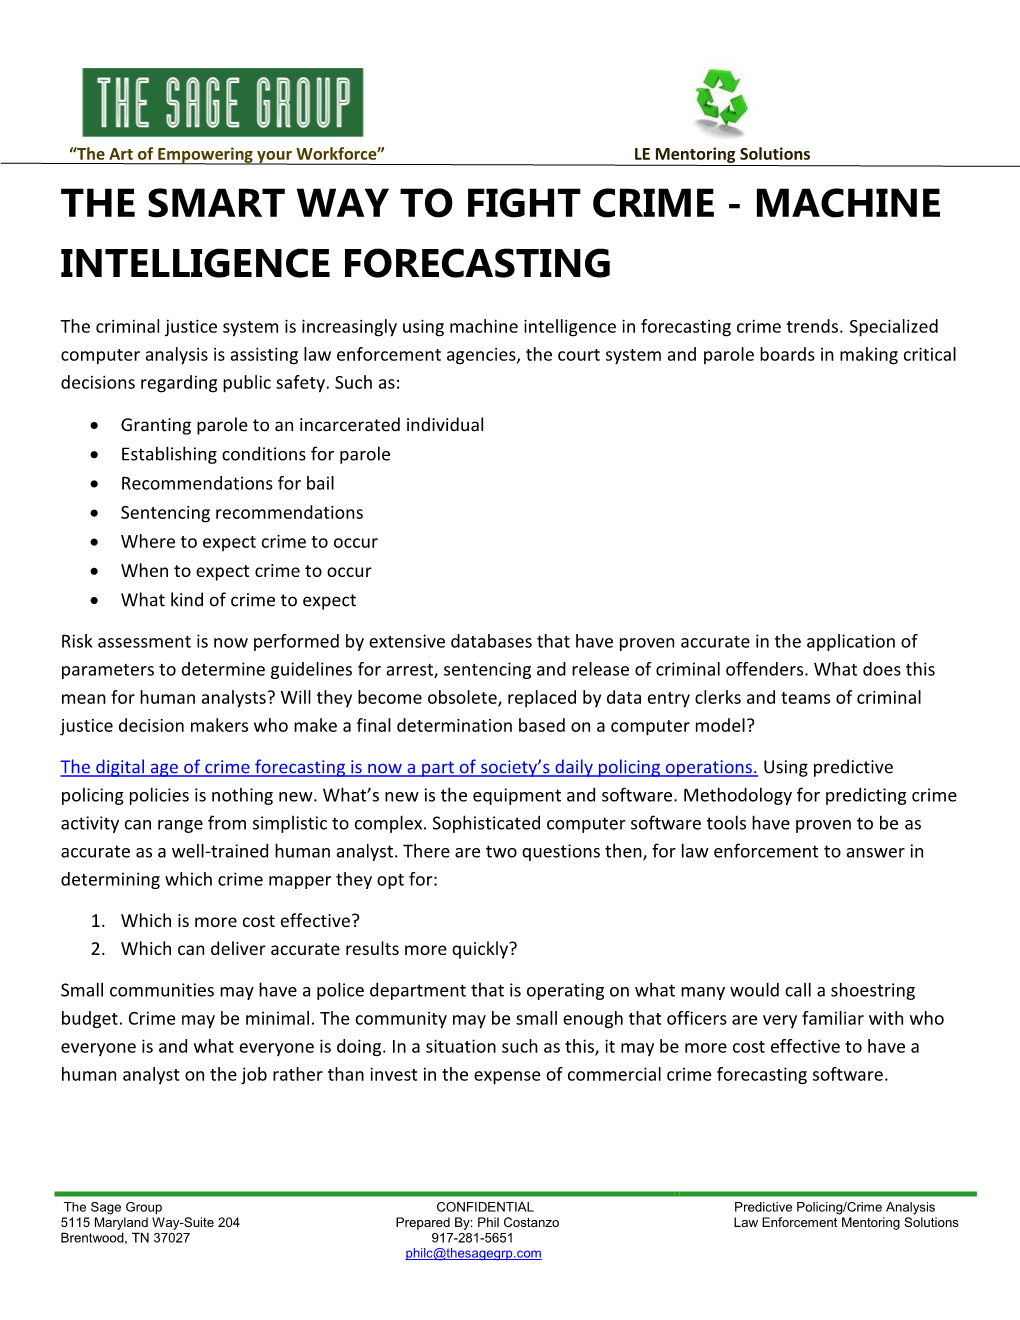 The Smart Way to Fight Crime - Machine Intelligence Forecasting